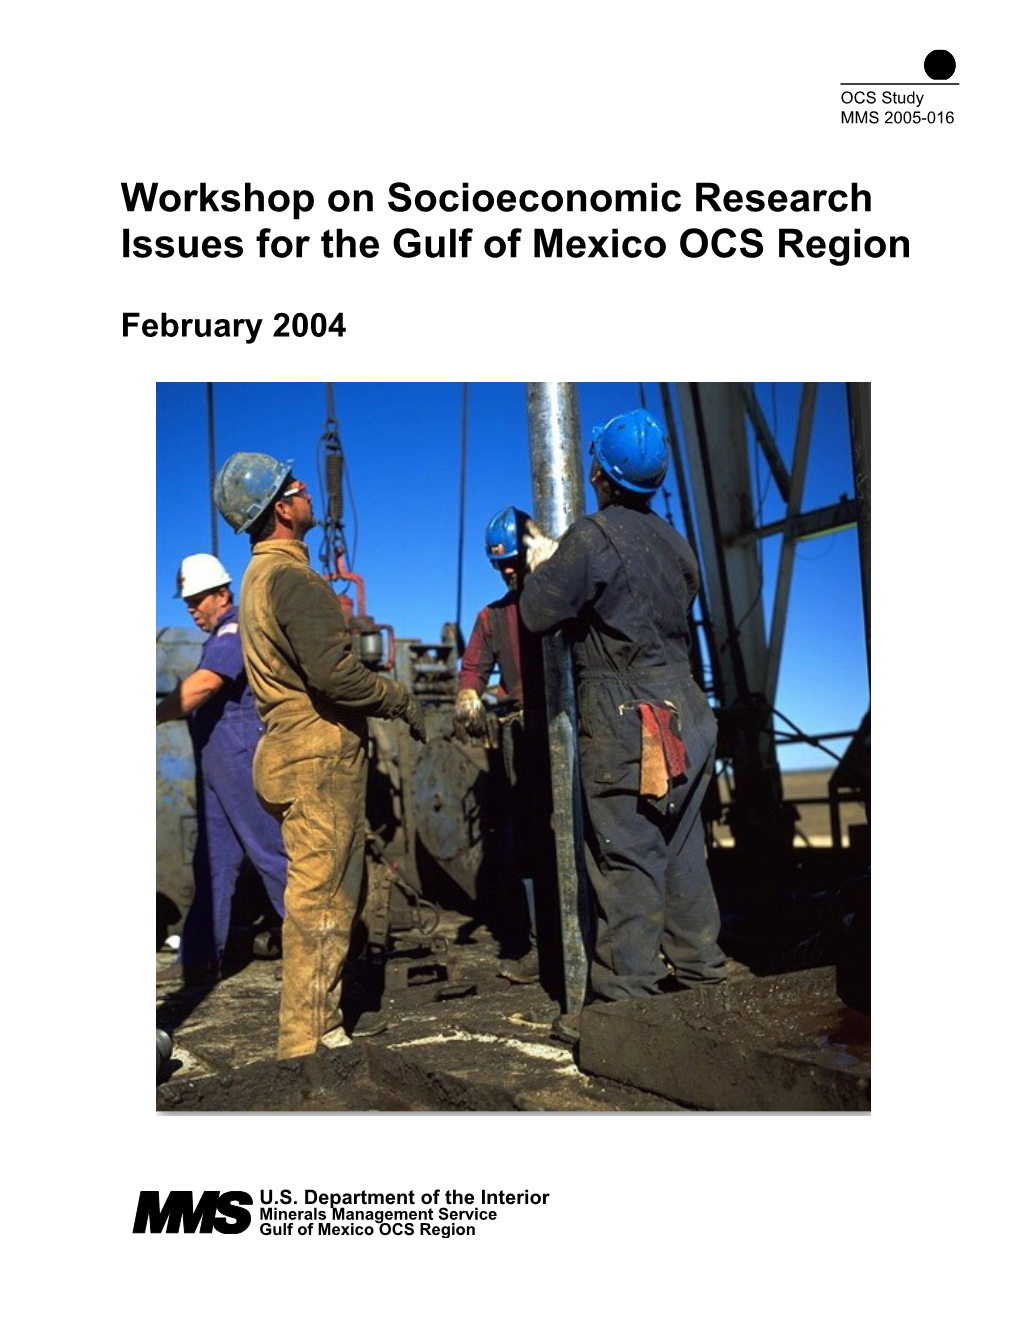 Socioeconomic Research Issues: Gulf of Mexico OCS Region